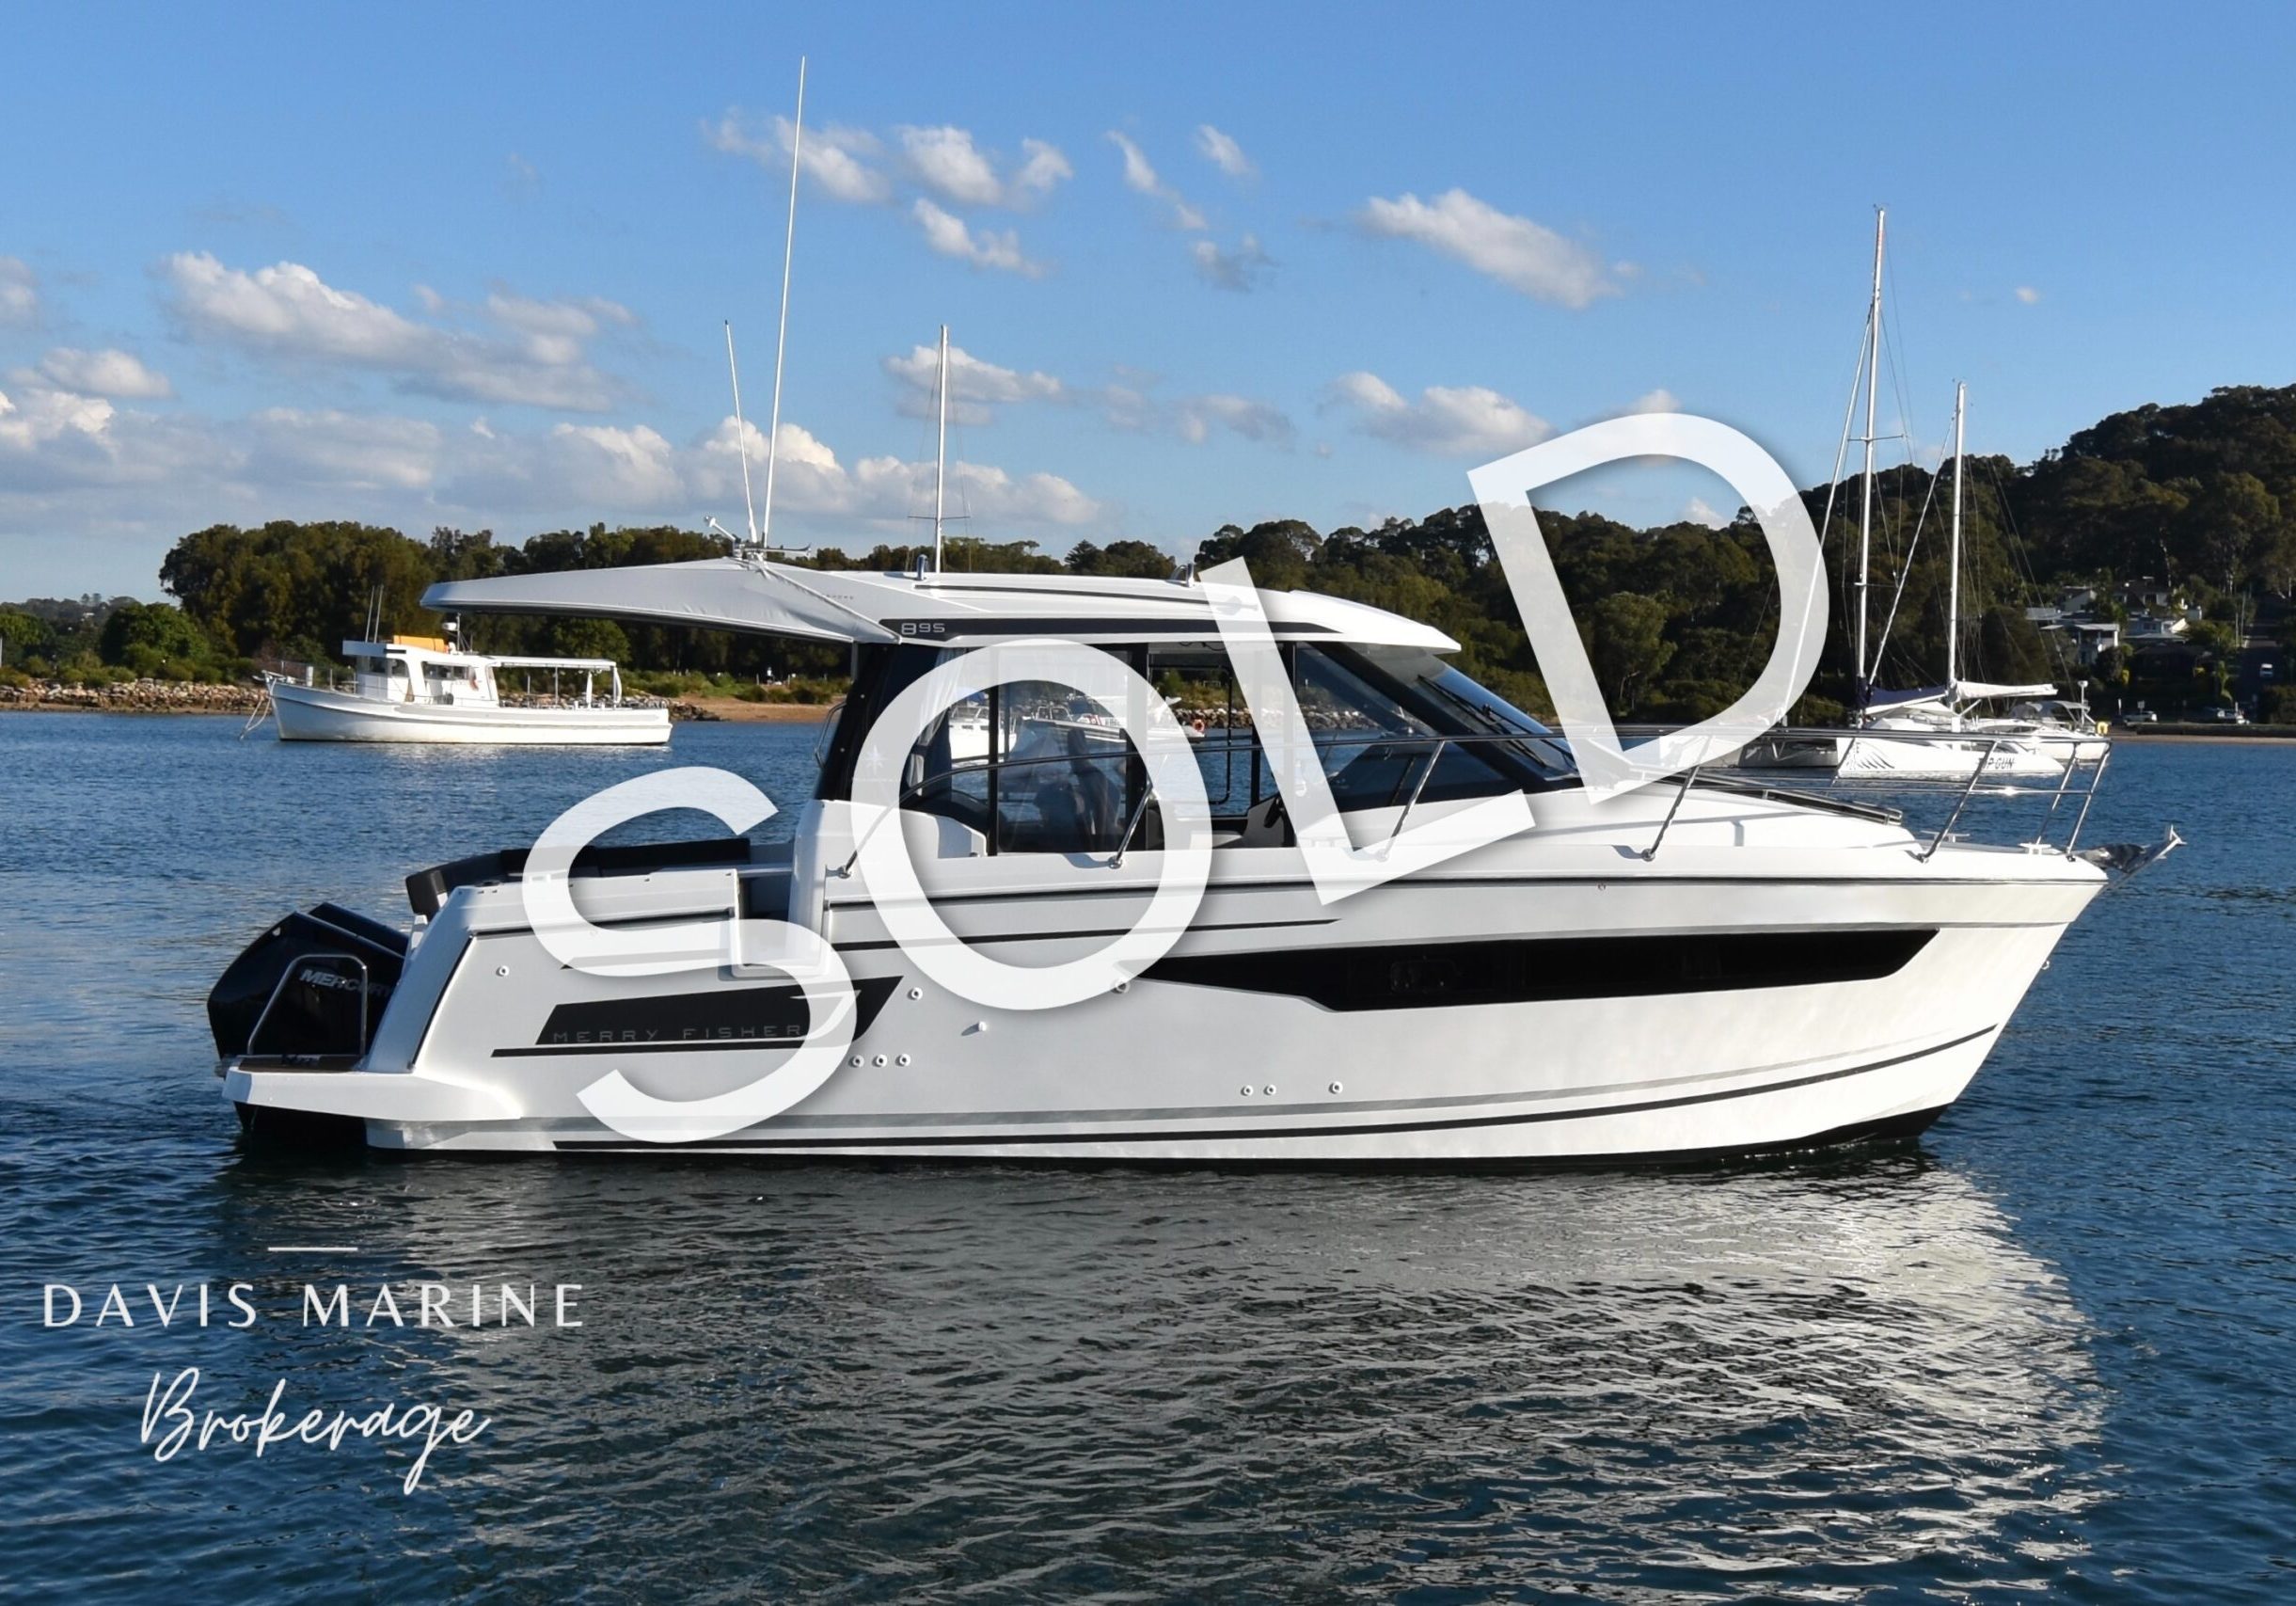 2021 Jeanneau Merry Fisher 895 Offshore Sell my Boat Sydney Davis Marine Brokerage